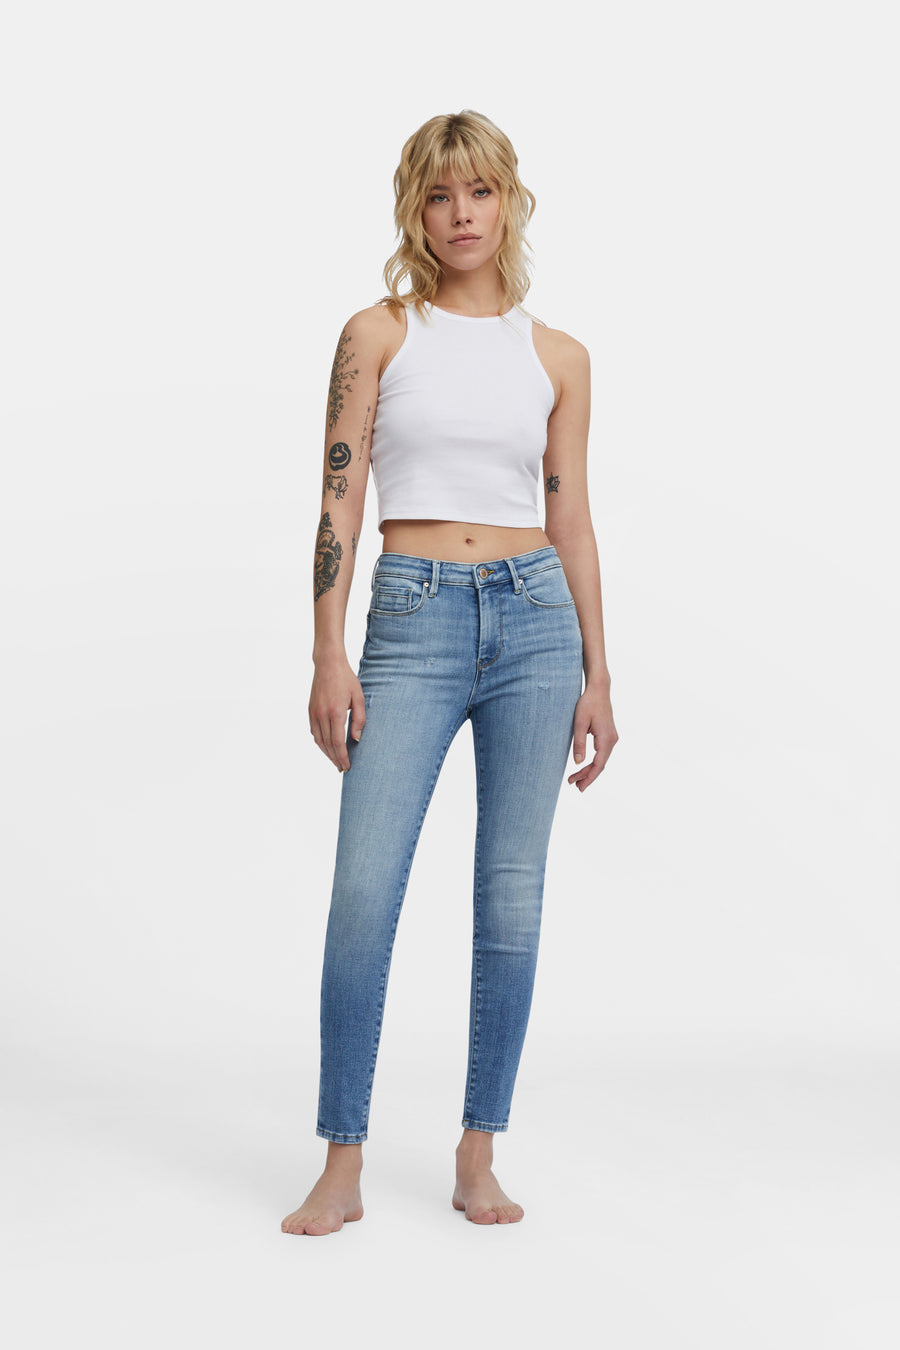 GAS Jeans - Feminine attitude to shine like a star. The 365 MOTION